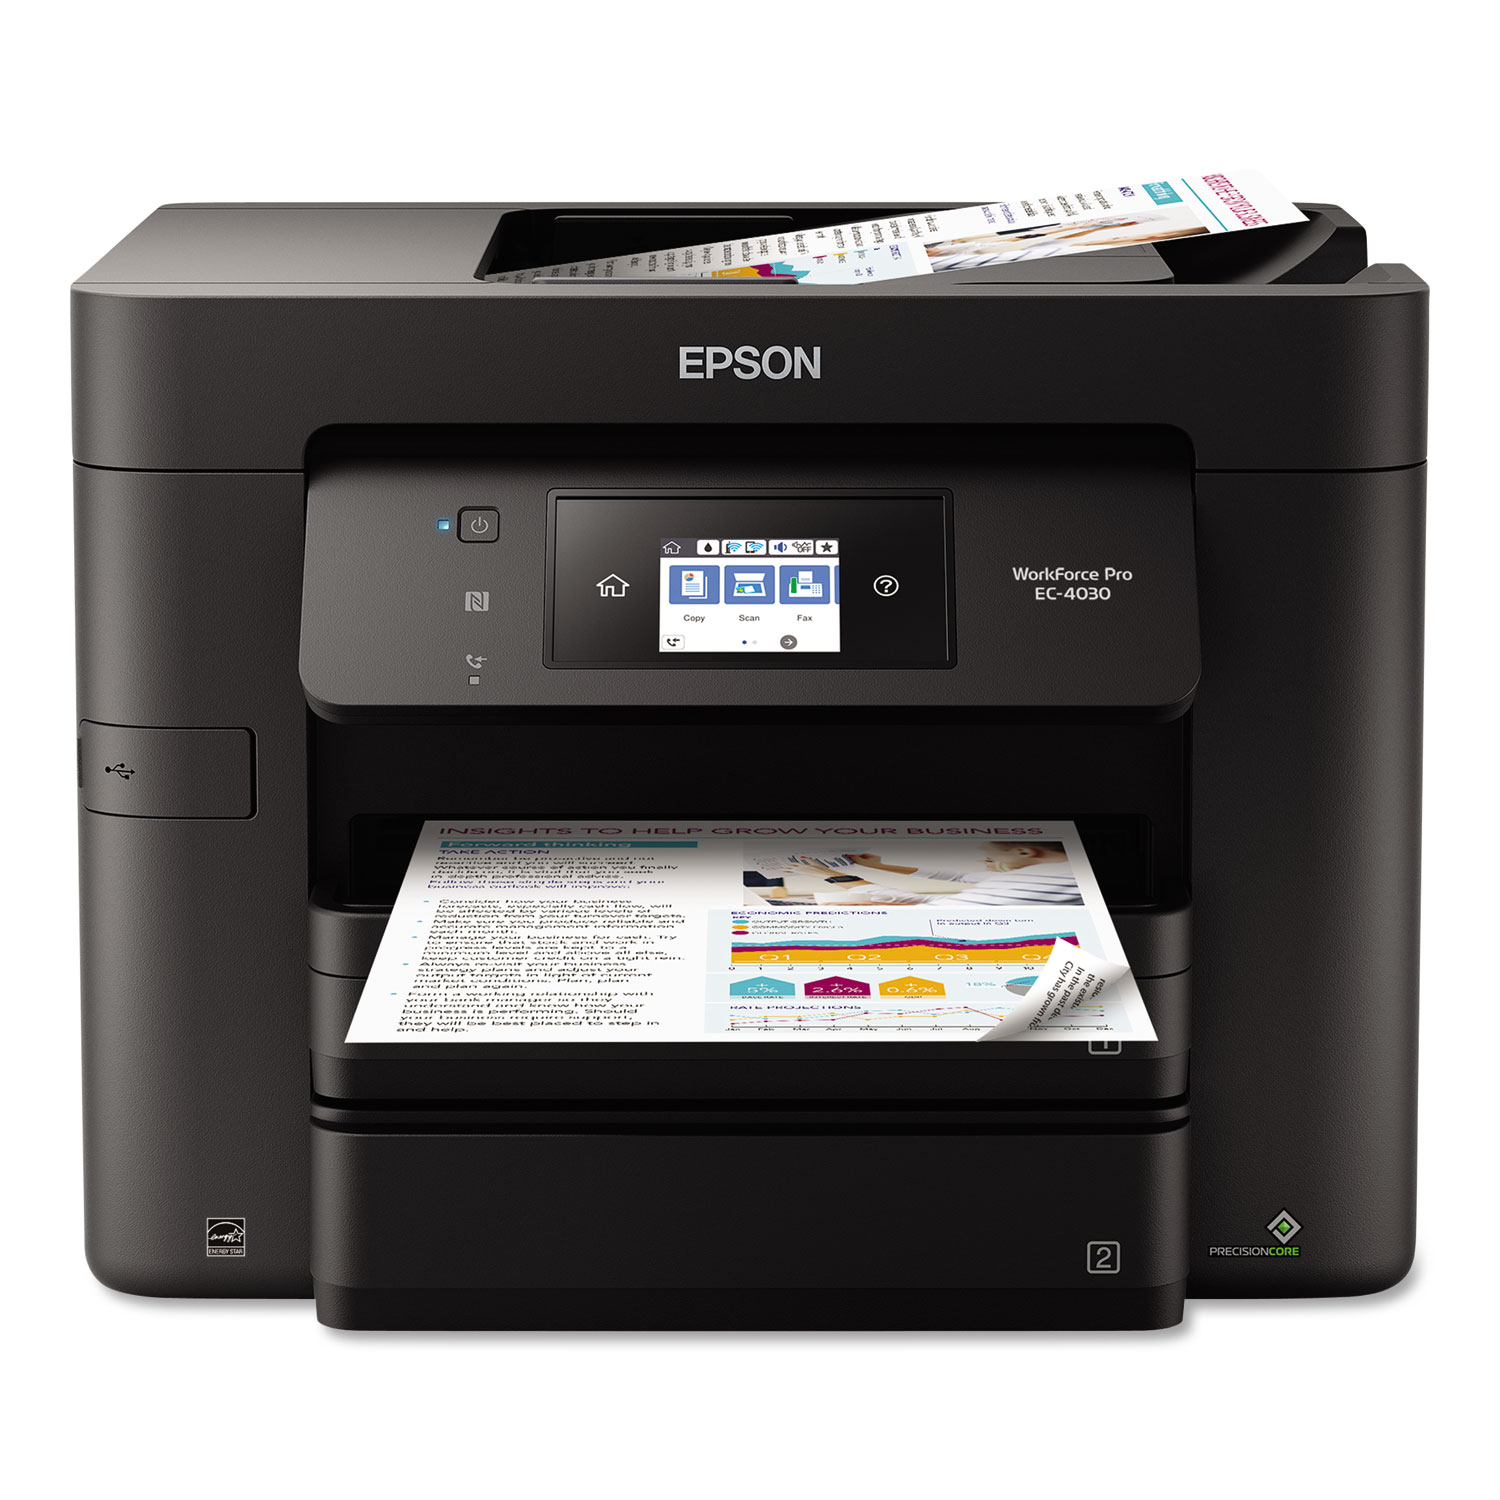  Epson C11CG01205 WorkForce Pro EC-4030 Color Multifunction Printer, Copy/Fax/Print/Scan (EPSC11CG01205) 